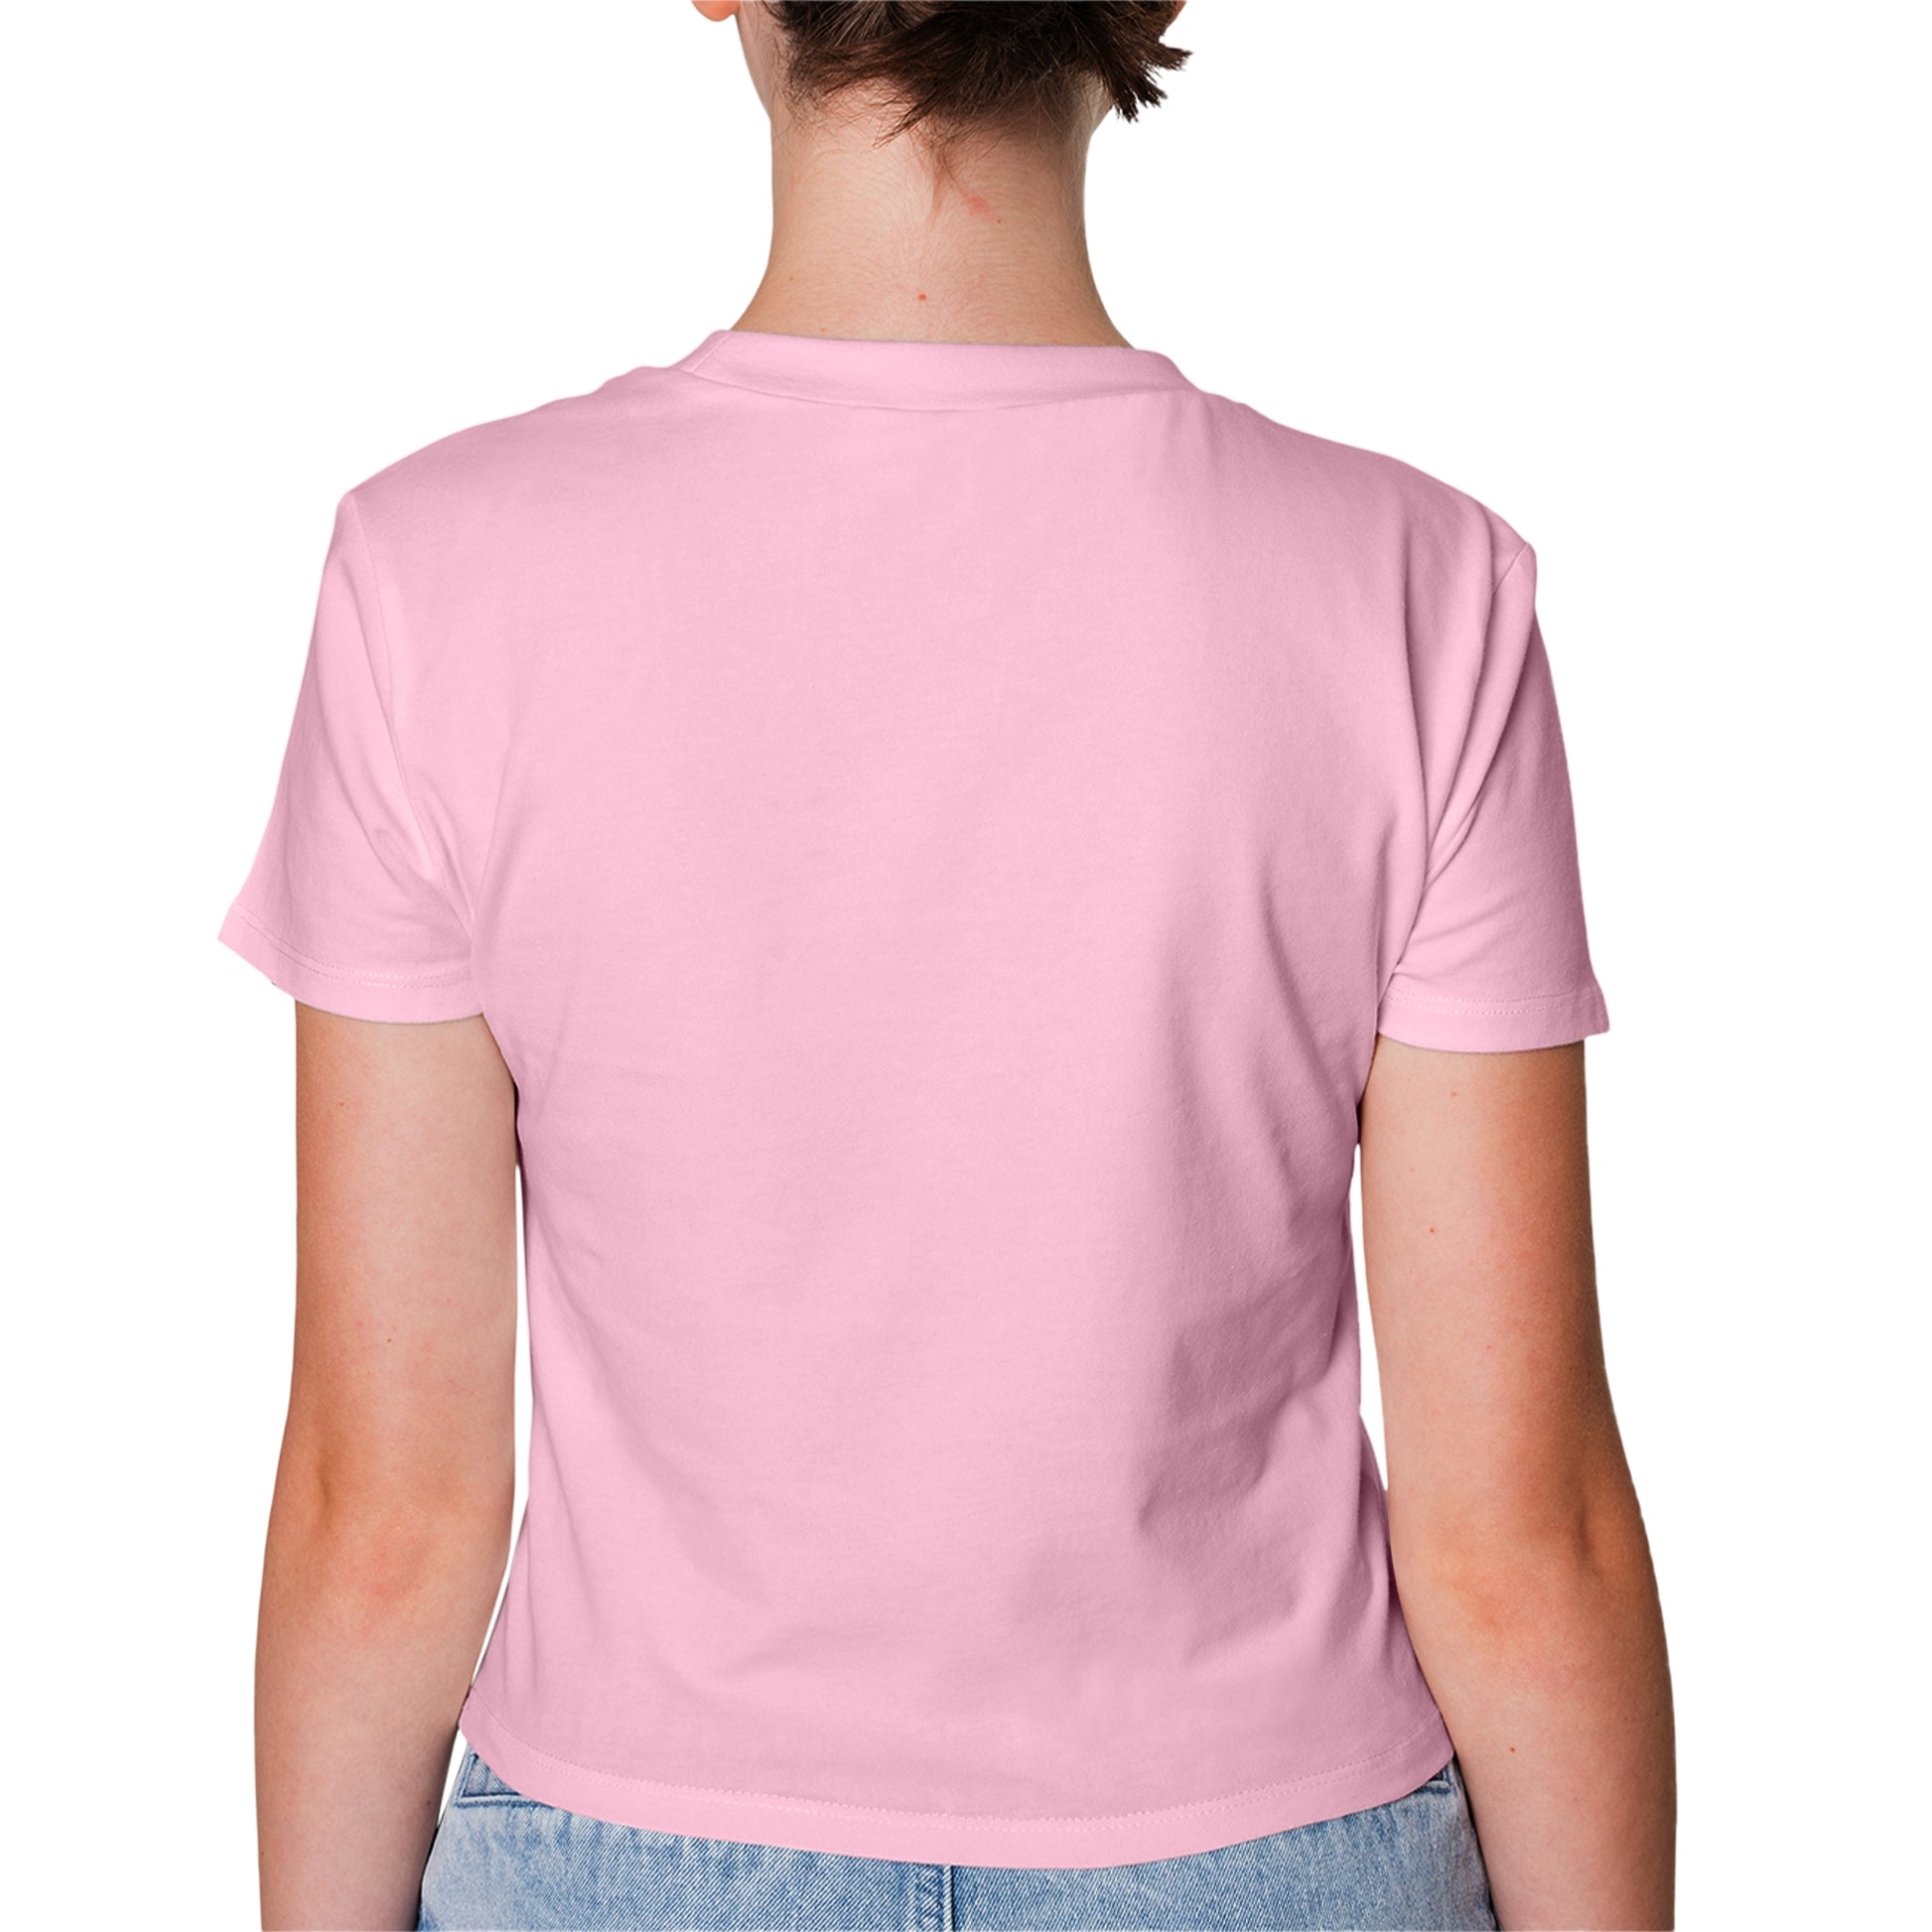 Pink T-Shirt For Women - FlyingCart.pk